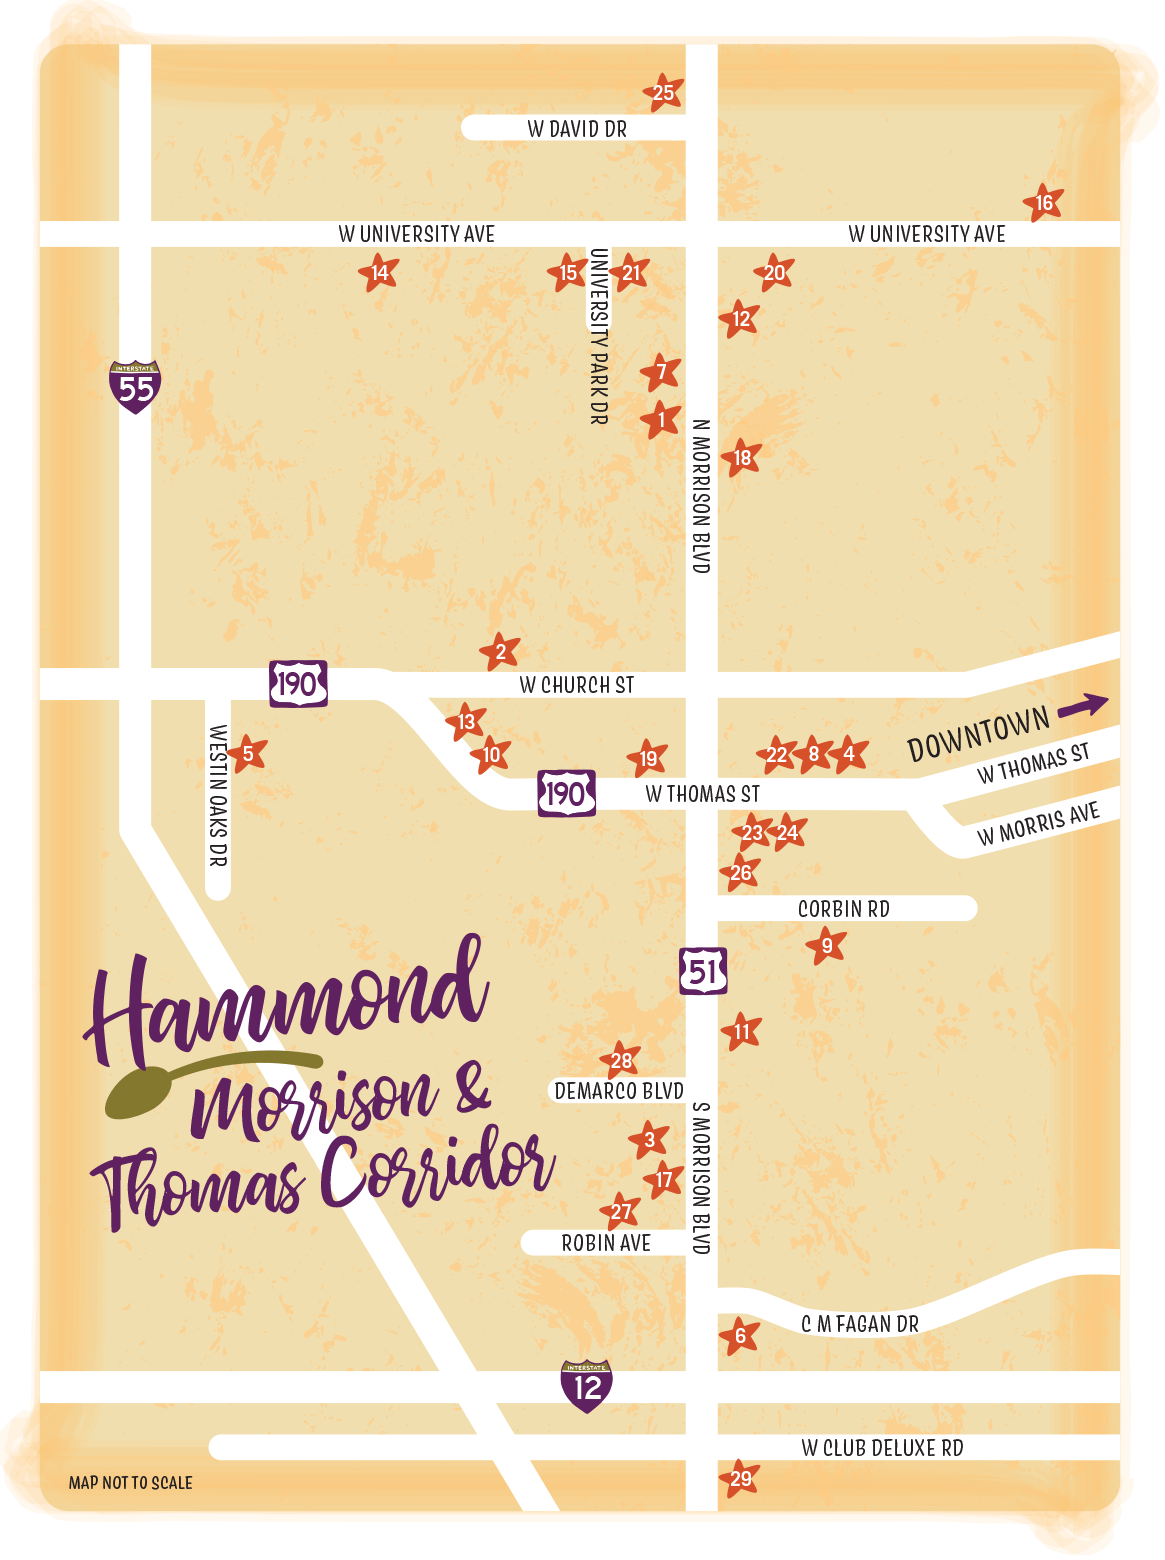 Hammond Morrison & Thomas Restaurants Map